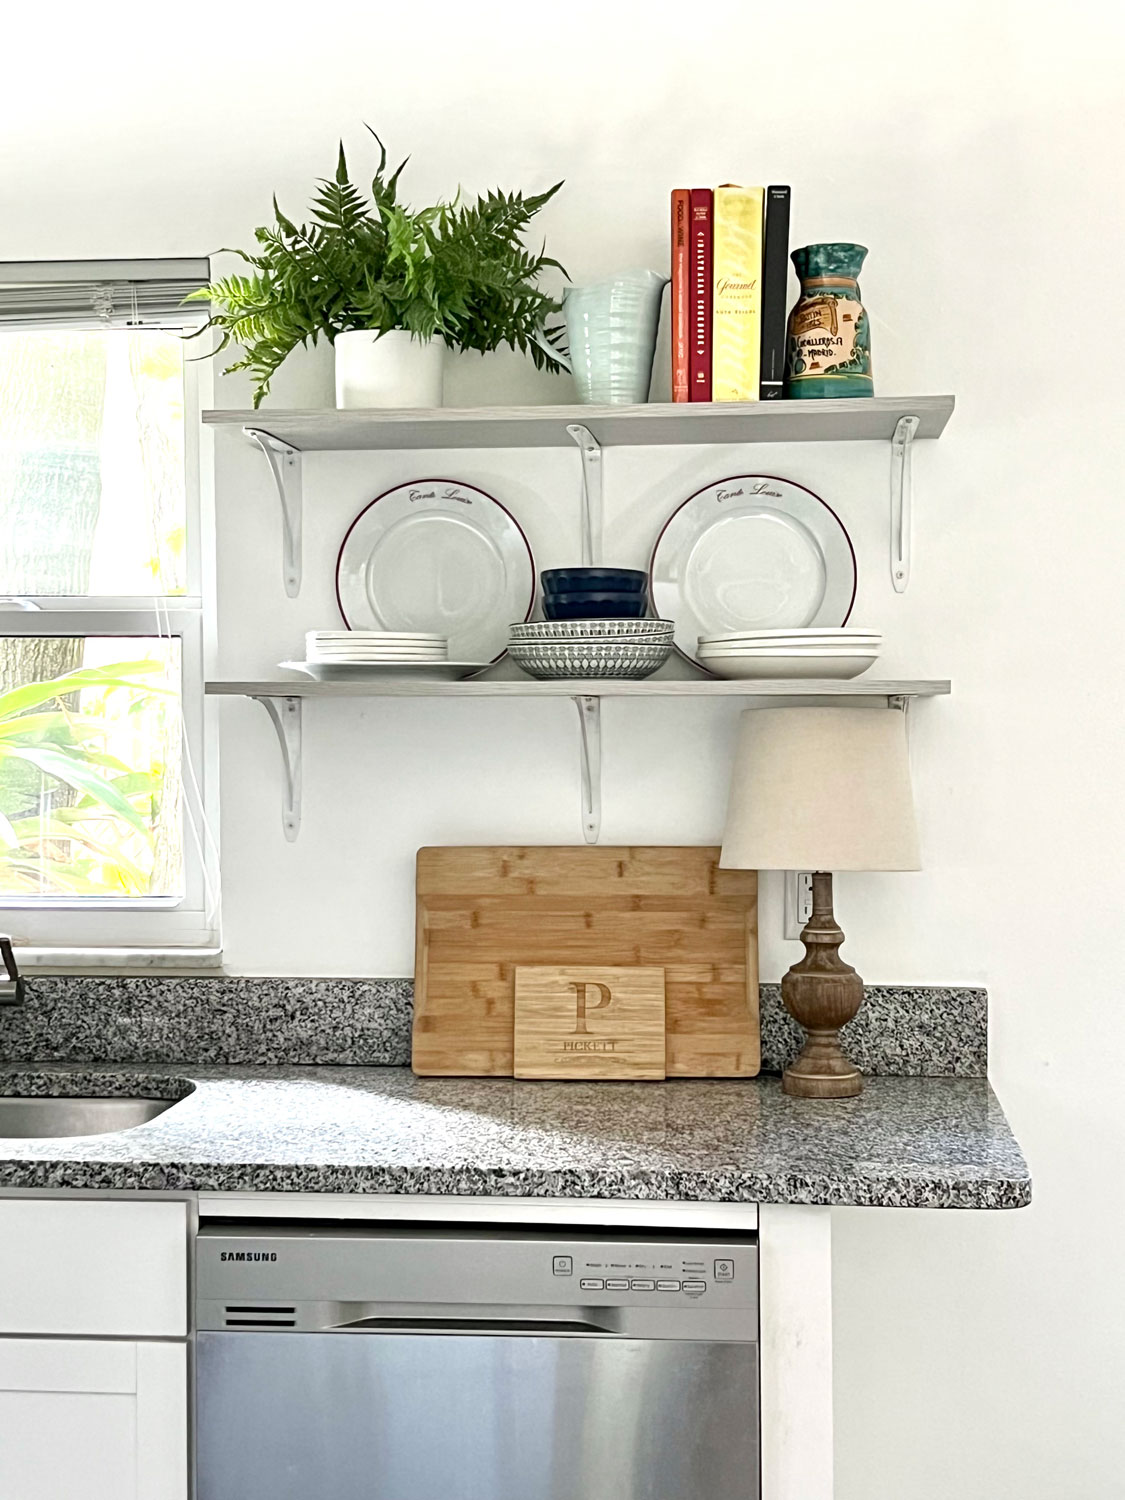 styled kitchen shelves